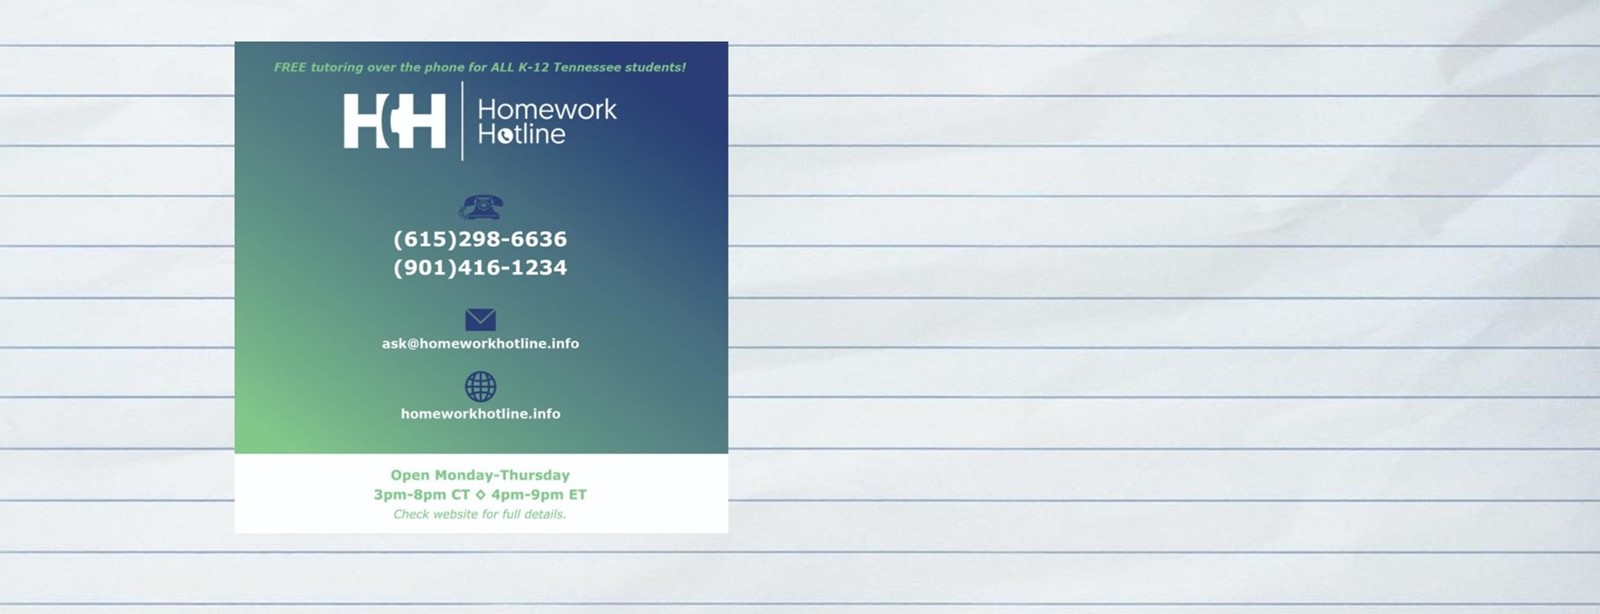 Homework Hotline Info